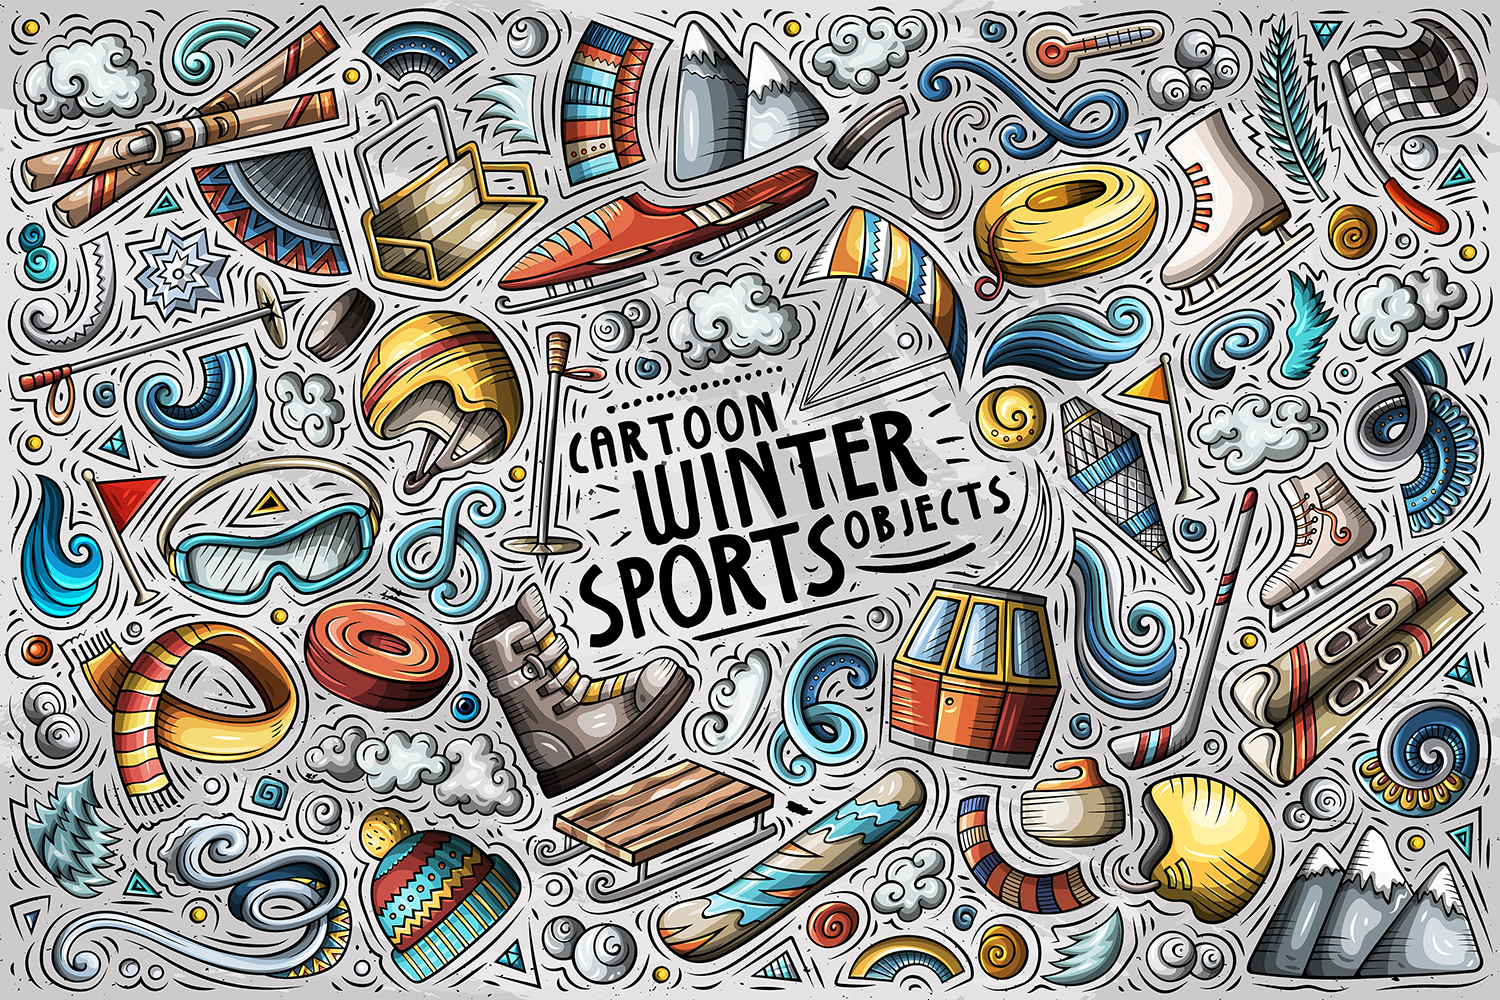 Winter Sports Cartoon Objects Set - Vector Image